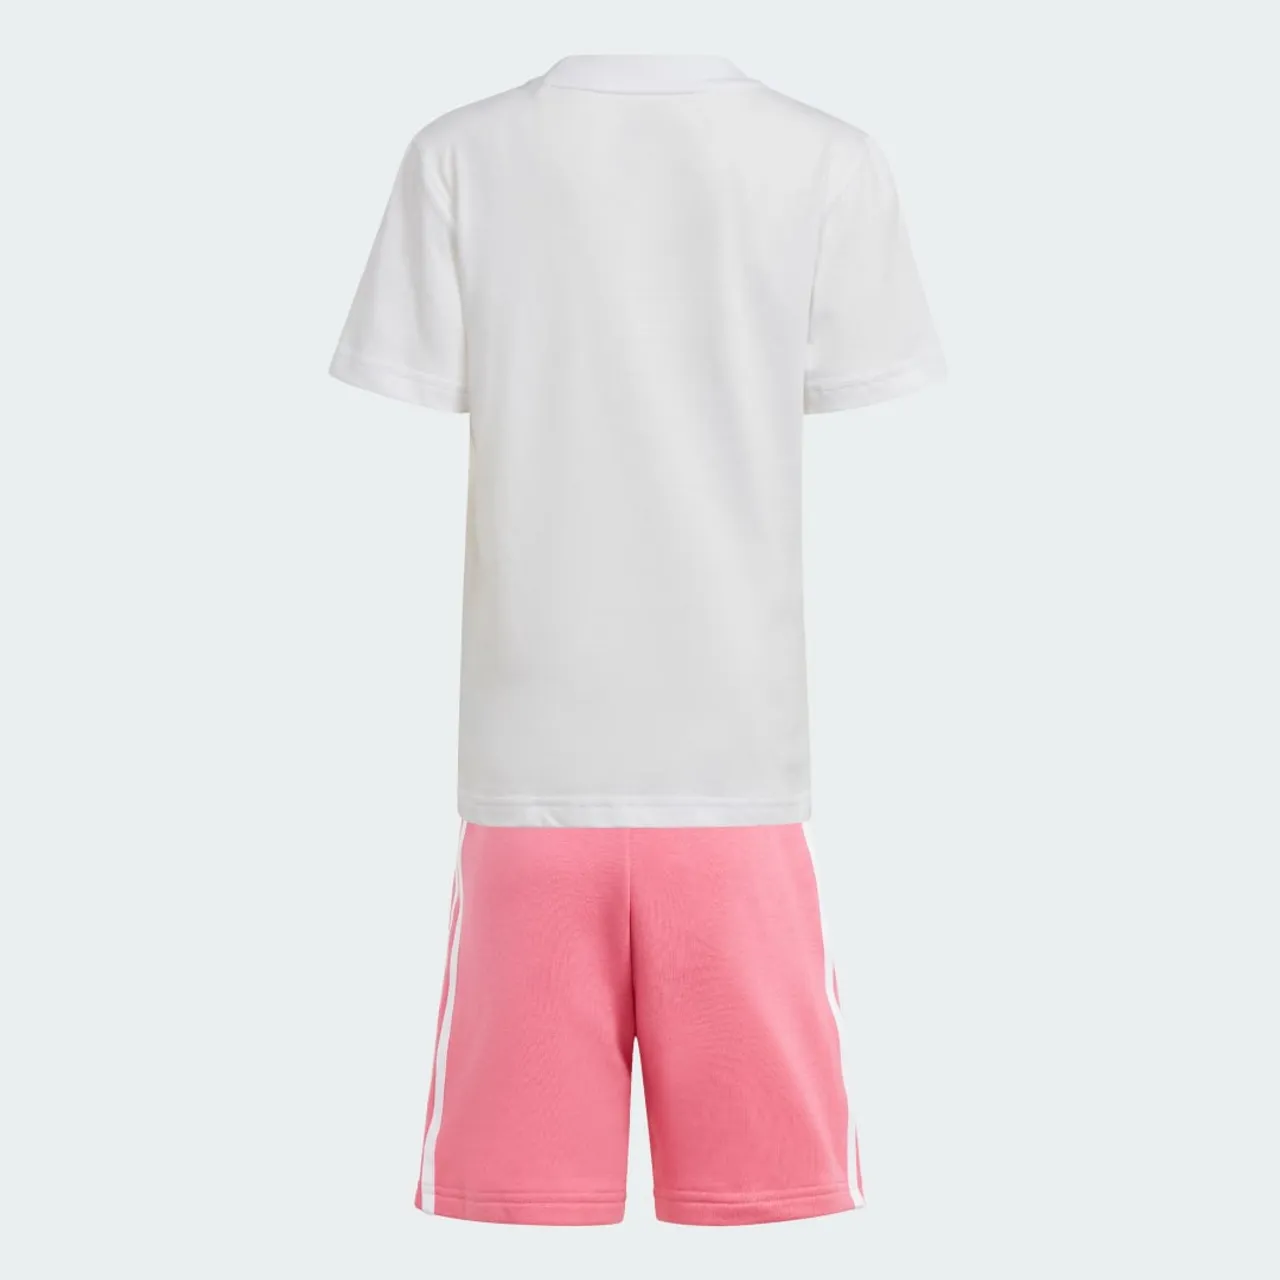 adicolor Shorts und T-Shirt Set